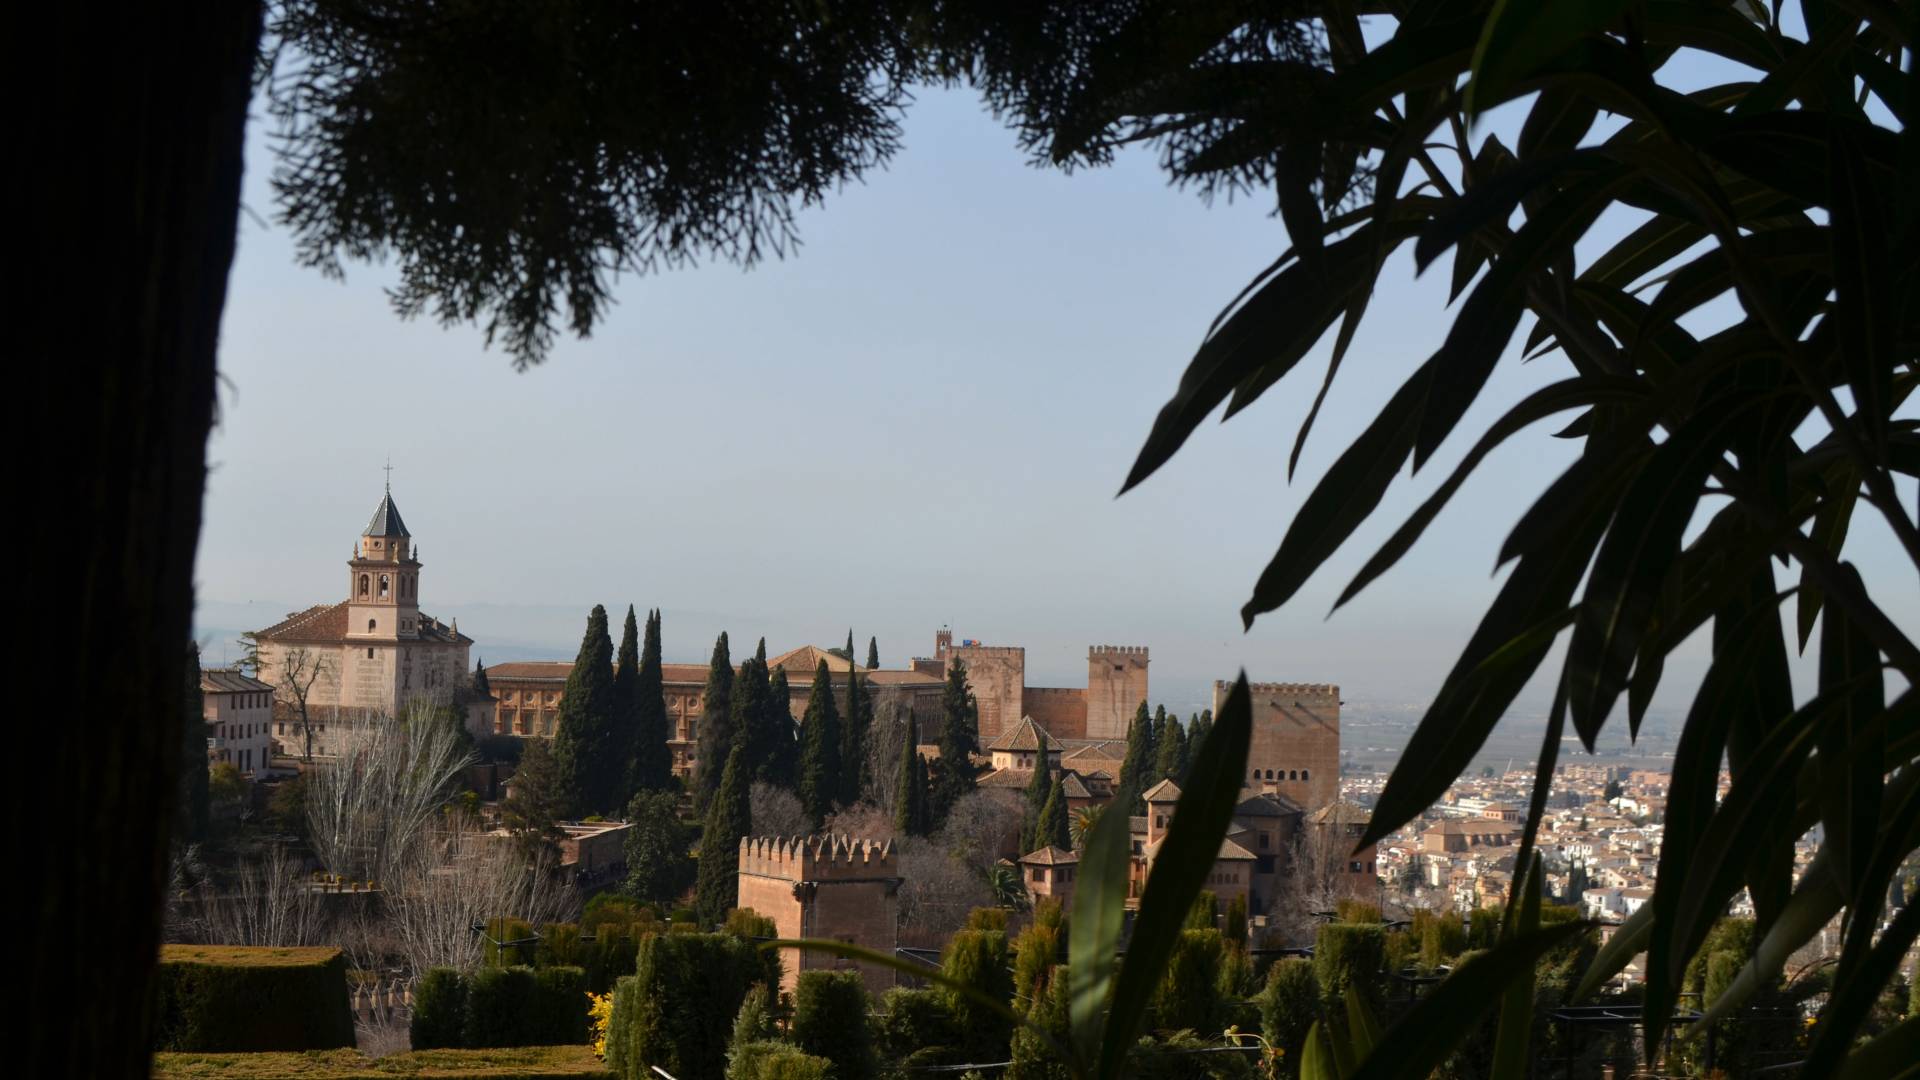 "Alhambra Through the Trees" (Granada, Spain)